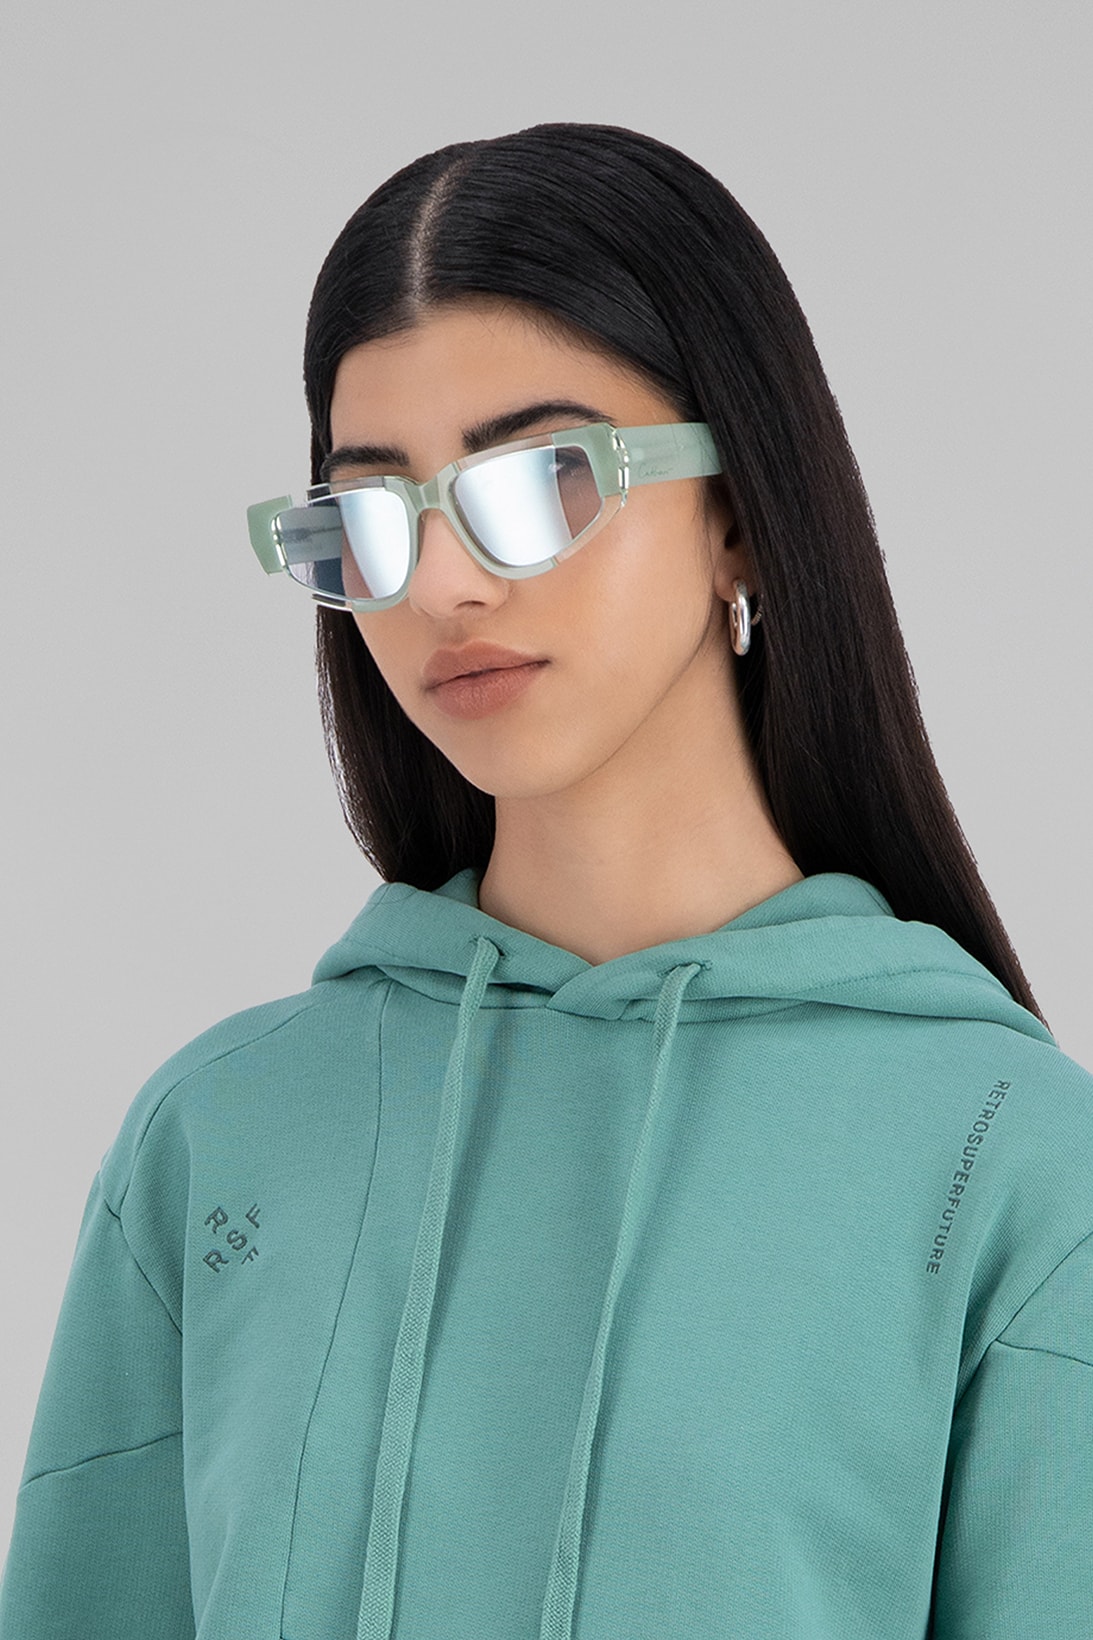 danielle cathari retrosuperfuture collaboration eyewear sunglasses shades blue black orange accessories